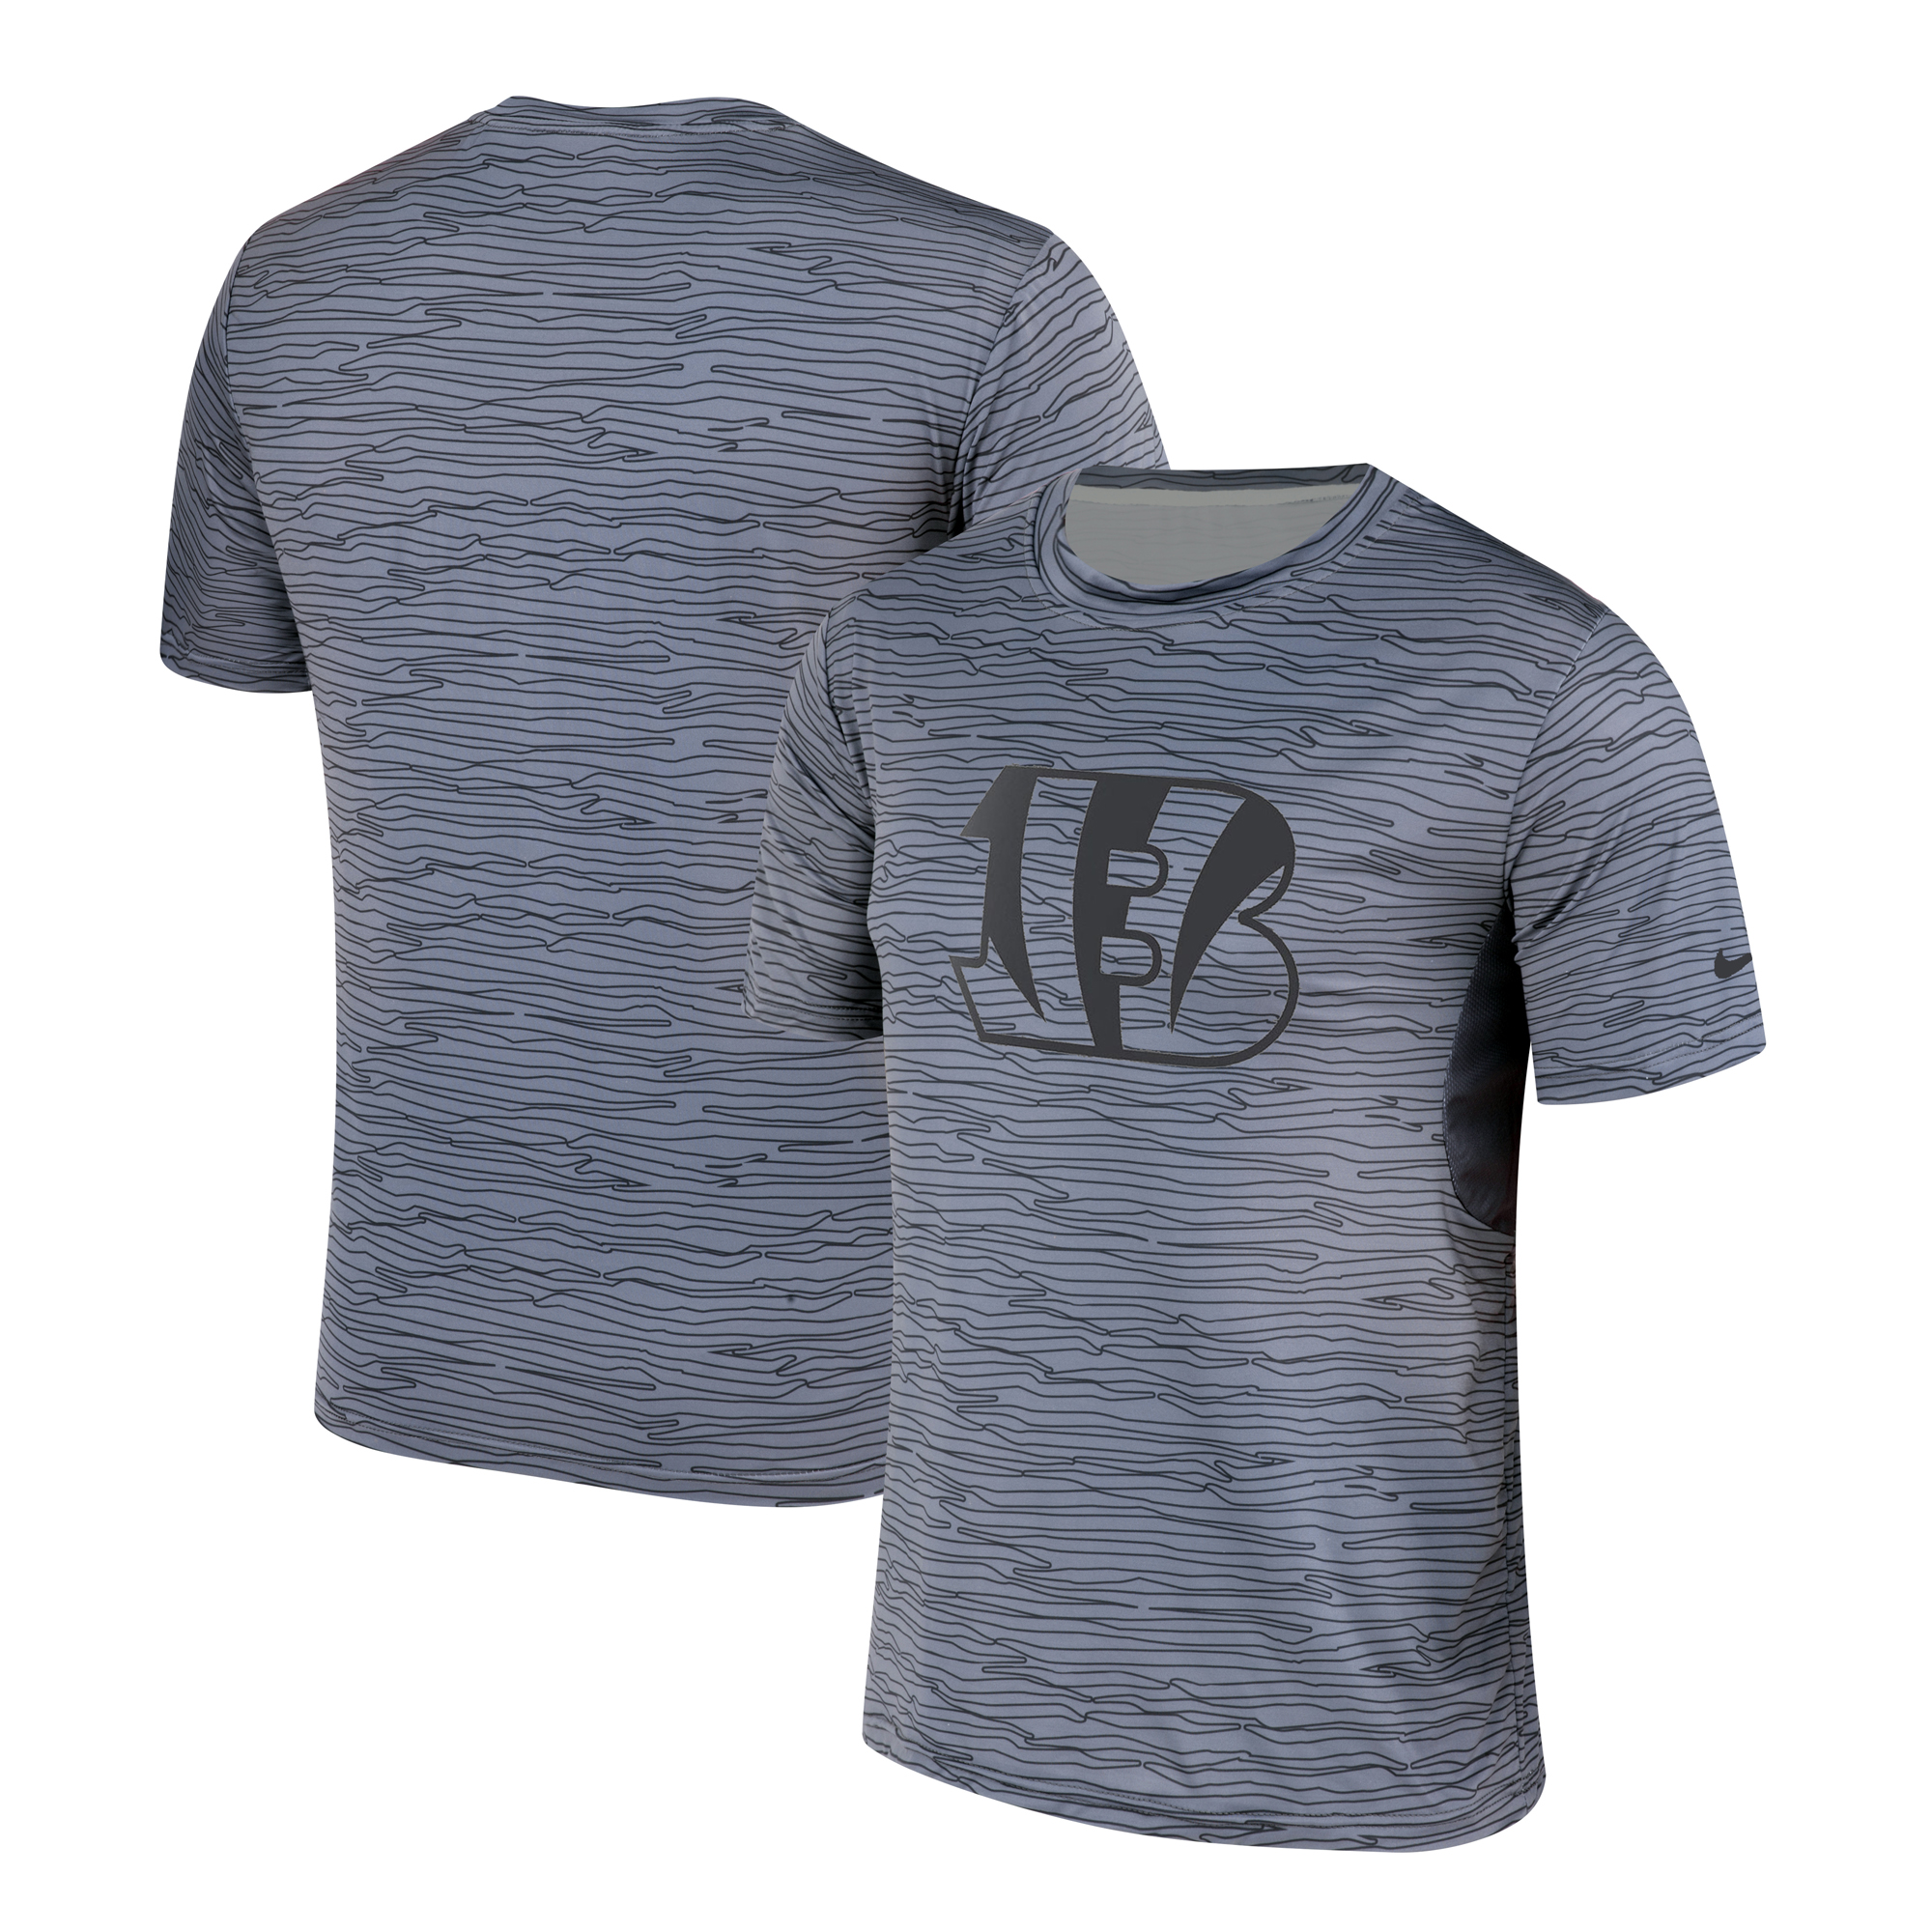 Men's Cincinnati Bengals Nike Gray Black Striped Logo Performance T-Shirt